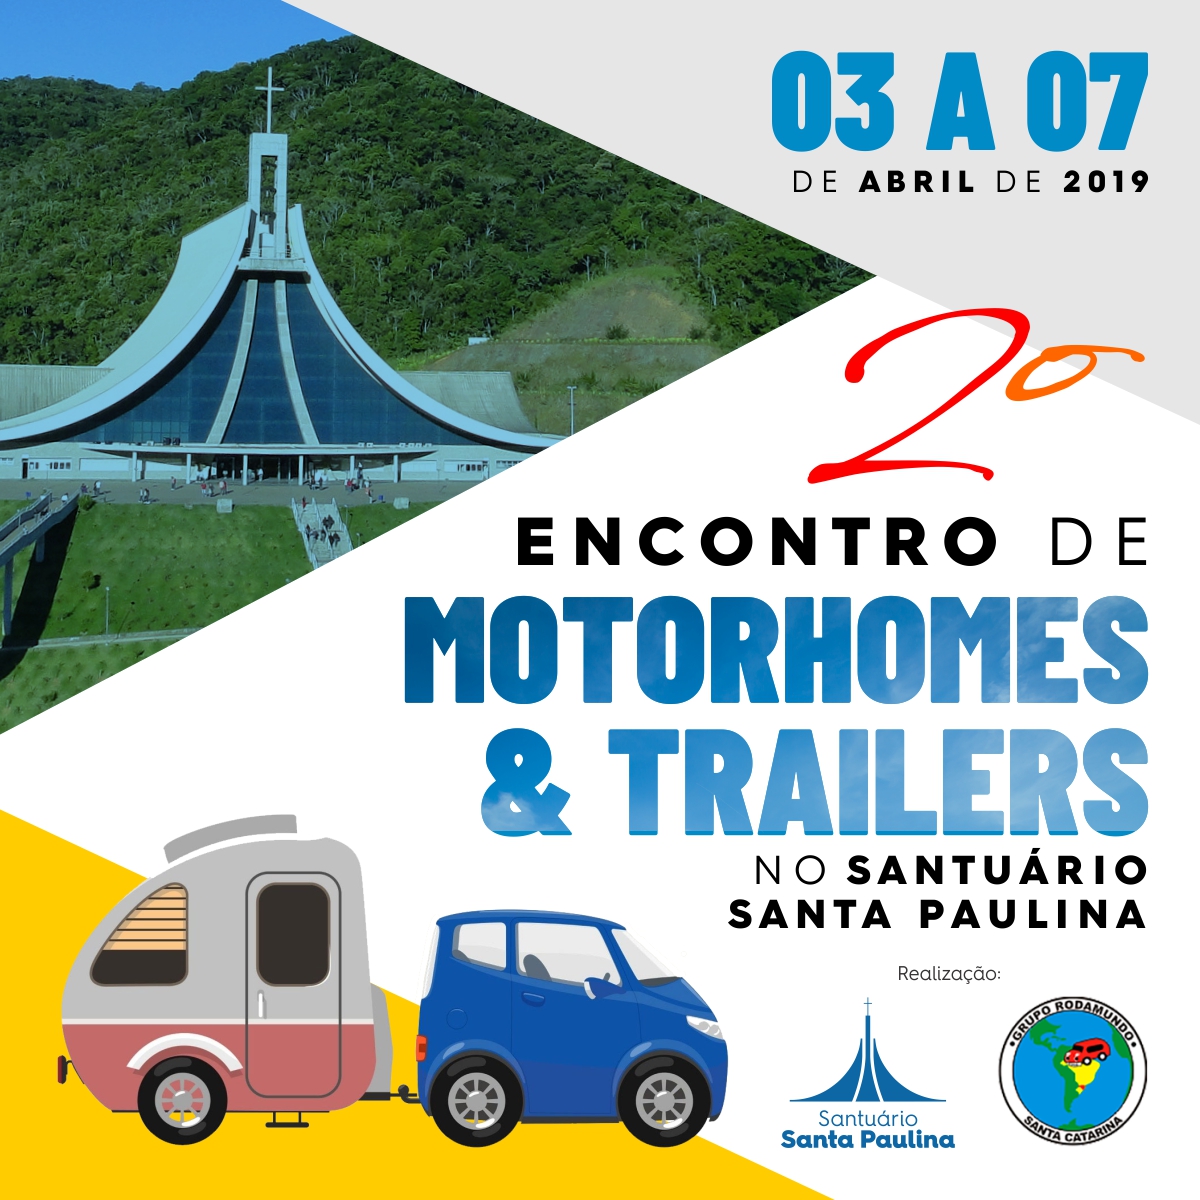 Encontro de Motorhomes - turismoonline.net.br